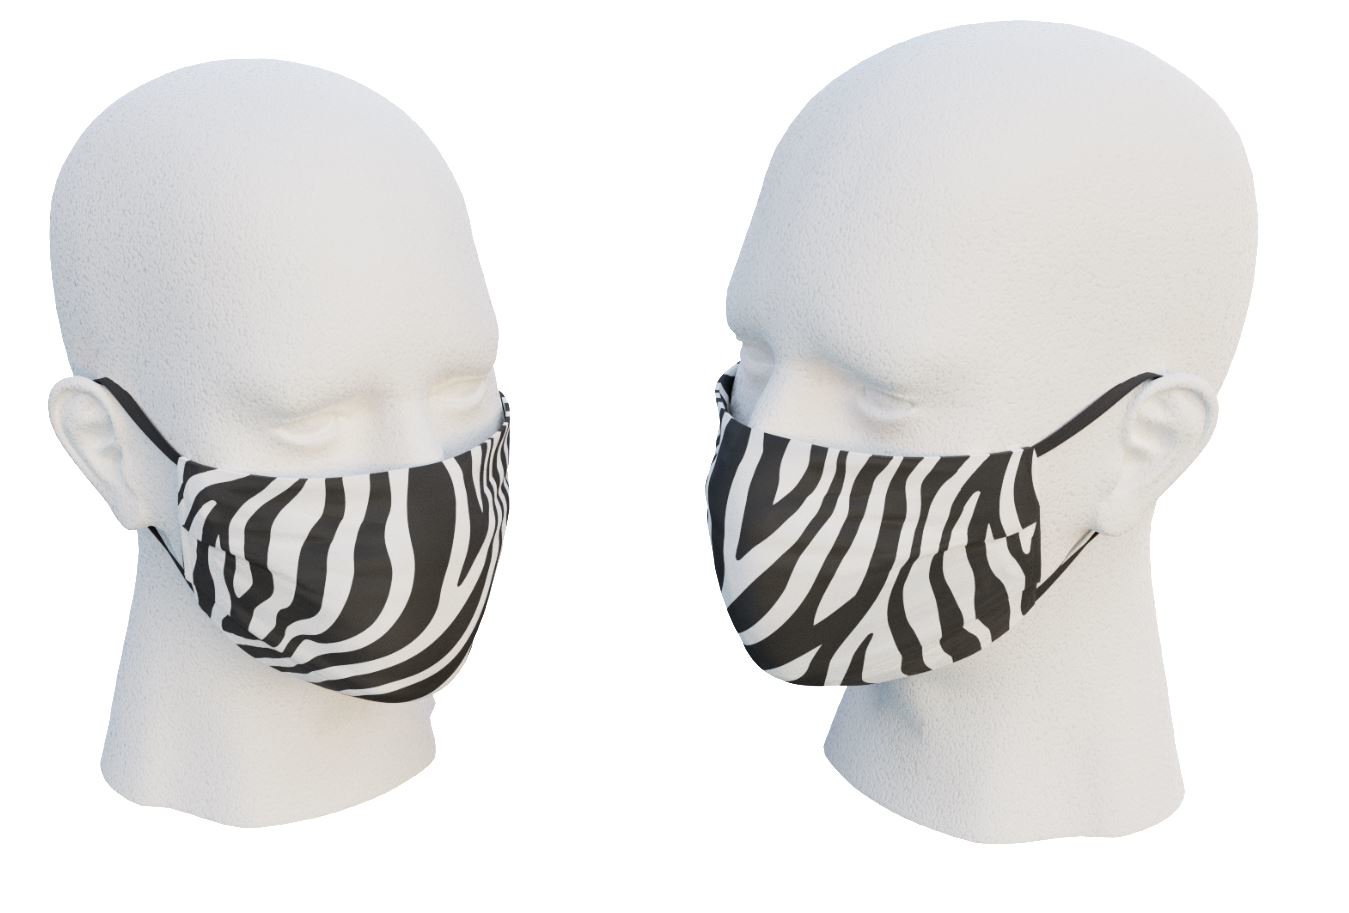 uk made face mask with zebra design